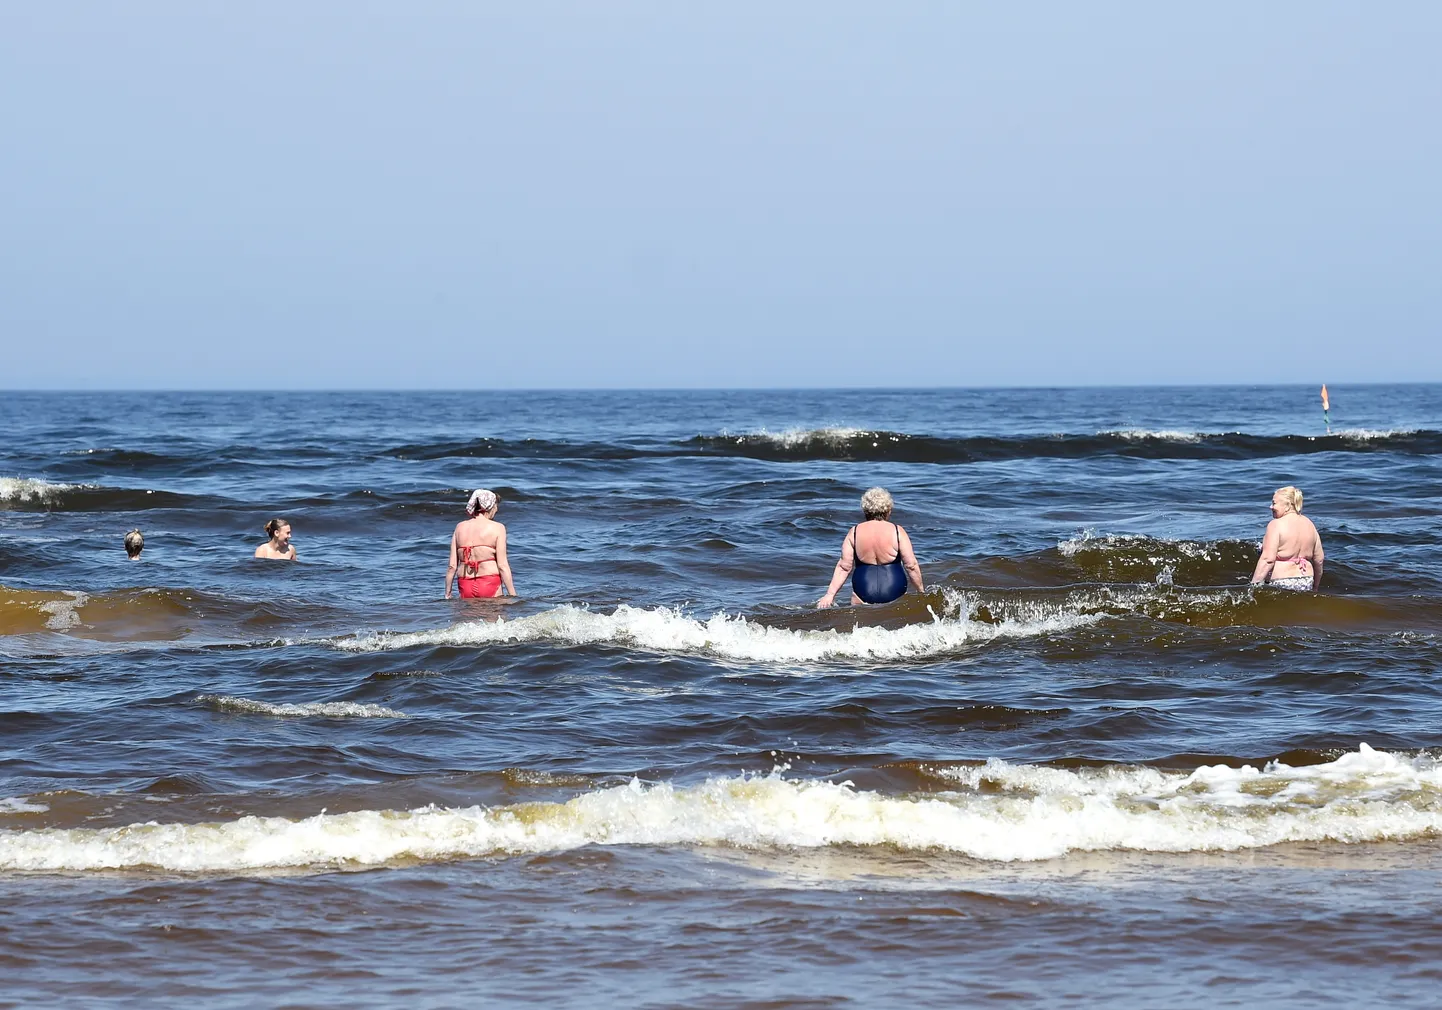 Cilvēki peldas Vecāķu pludmalē.